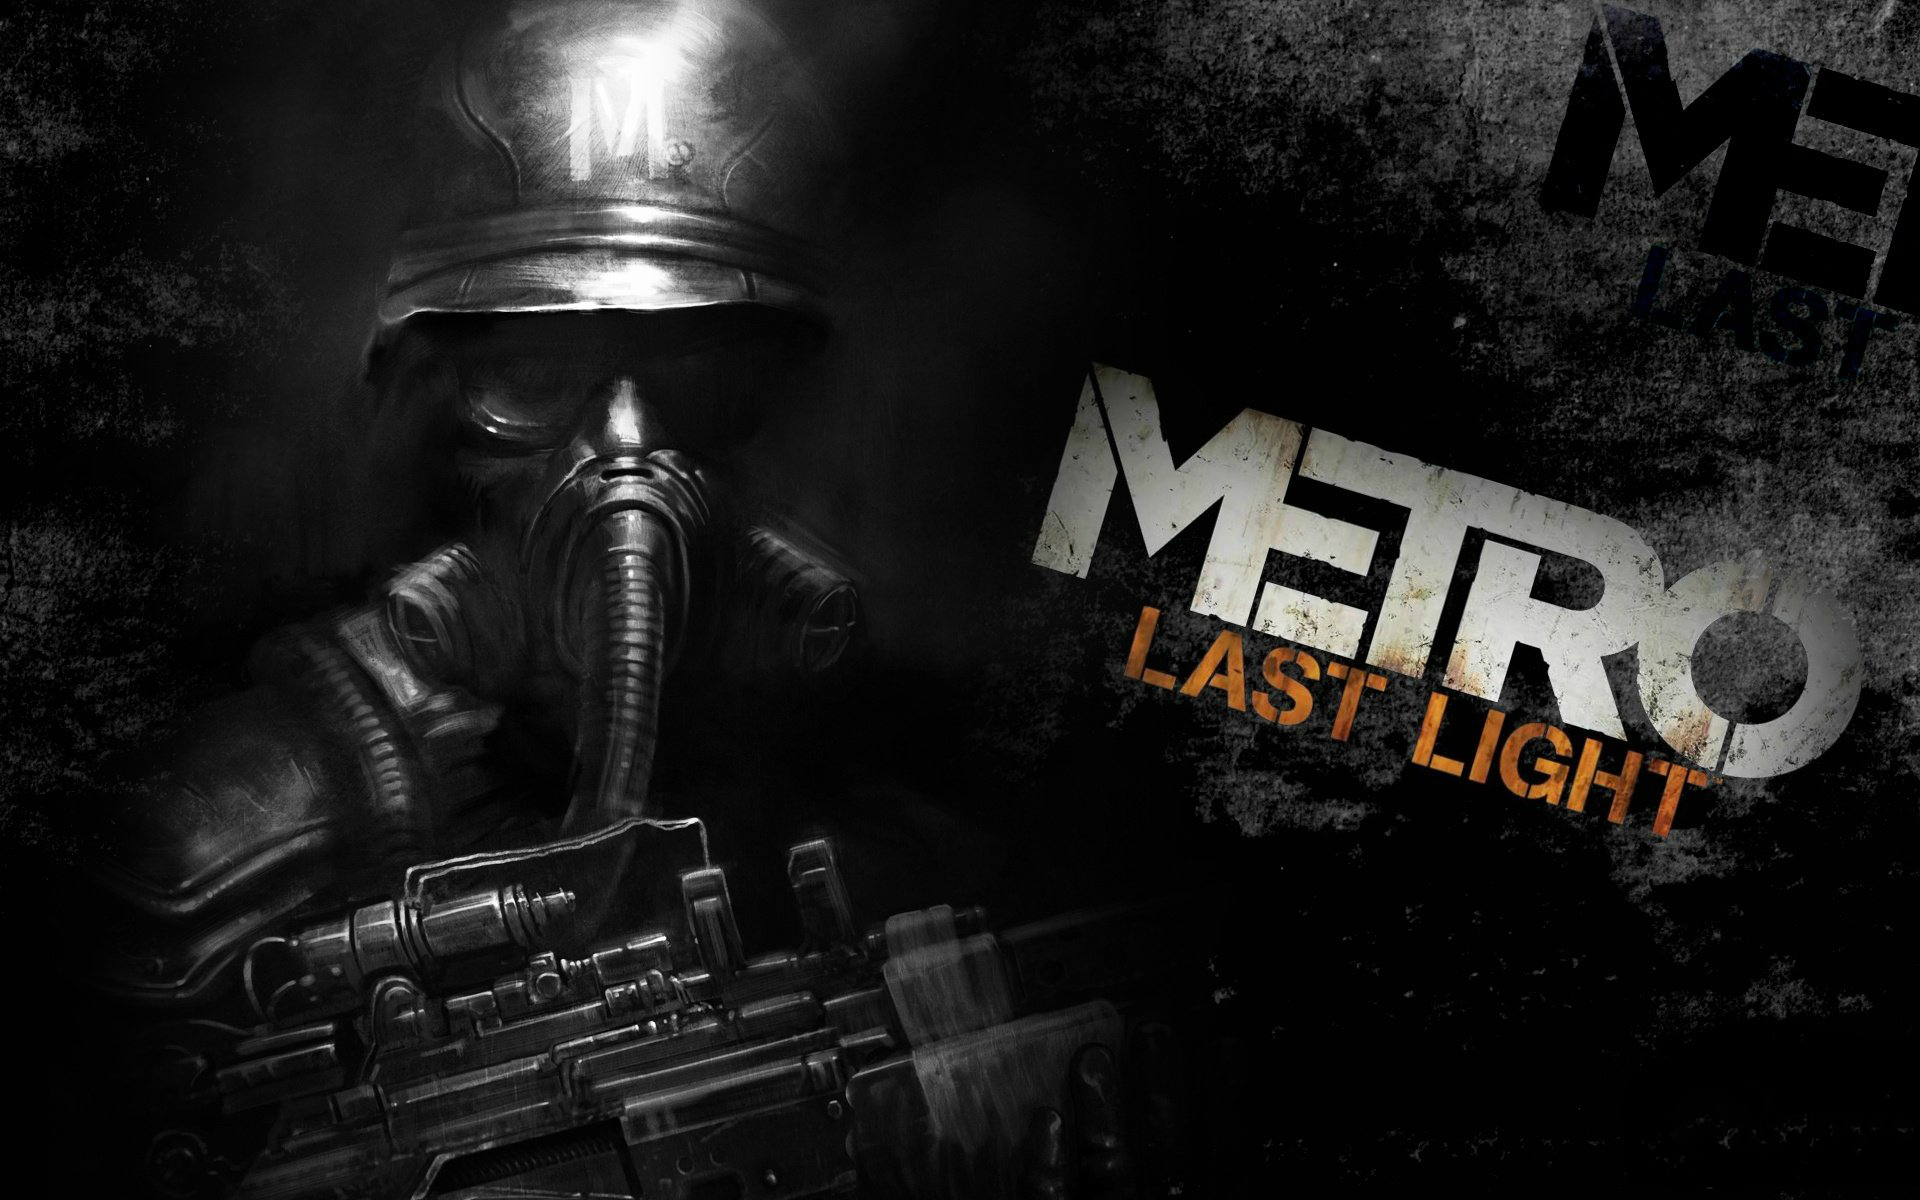 Video Game Metro: Last Light HD Wallpaper | Background Image